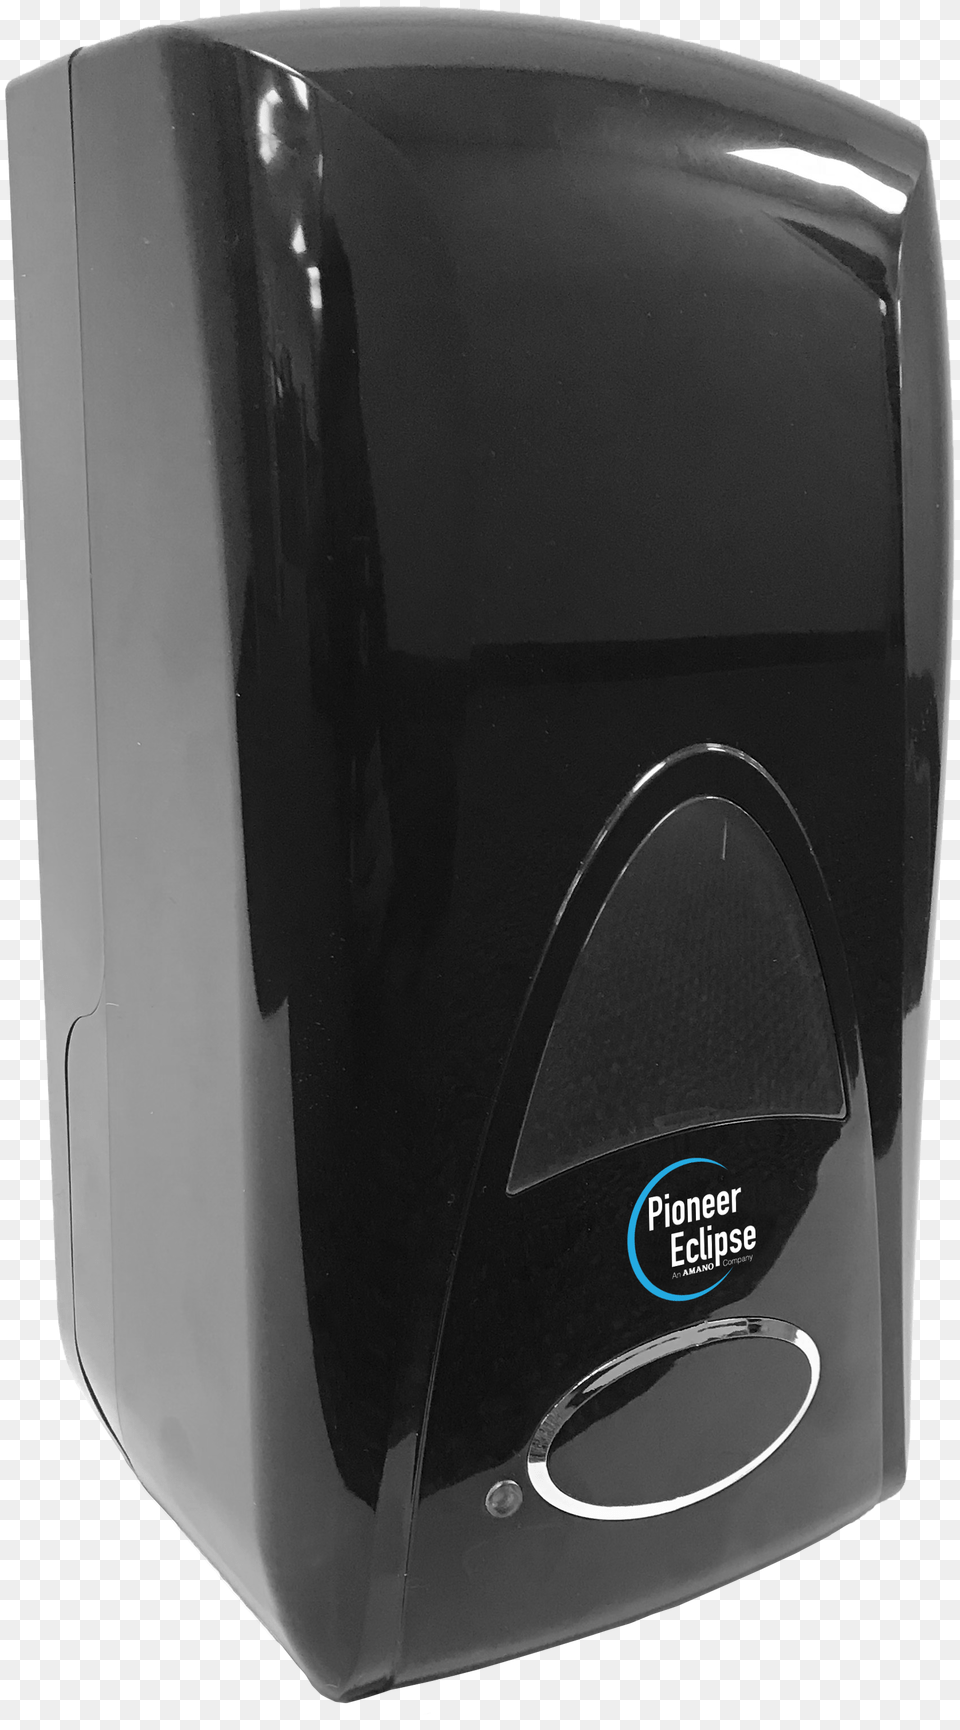 Auto Soap Dispenser Black High Resolution Computer Case, Electronics, Speaker, Device, Appliance Png